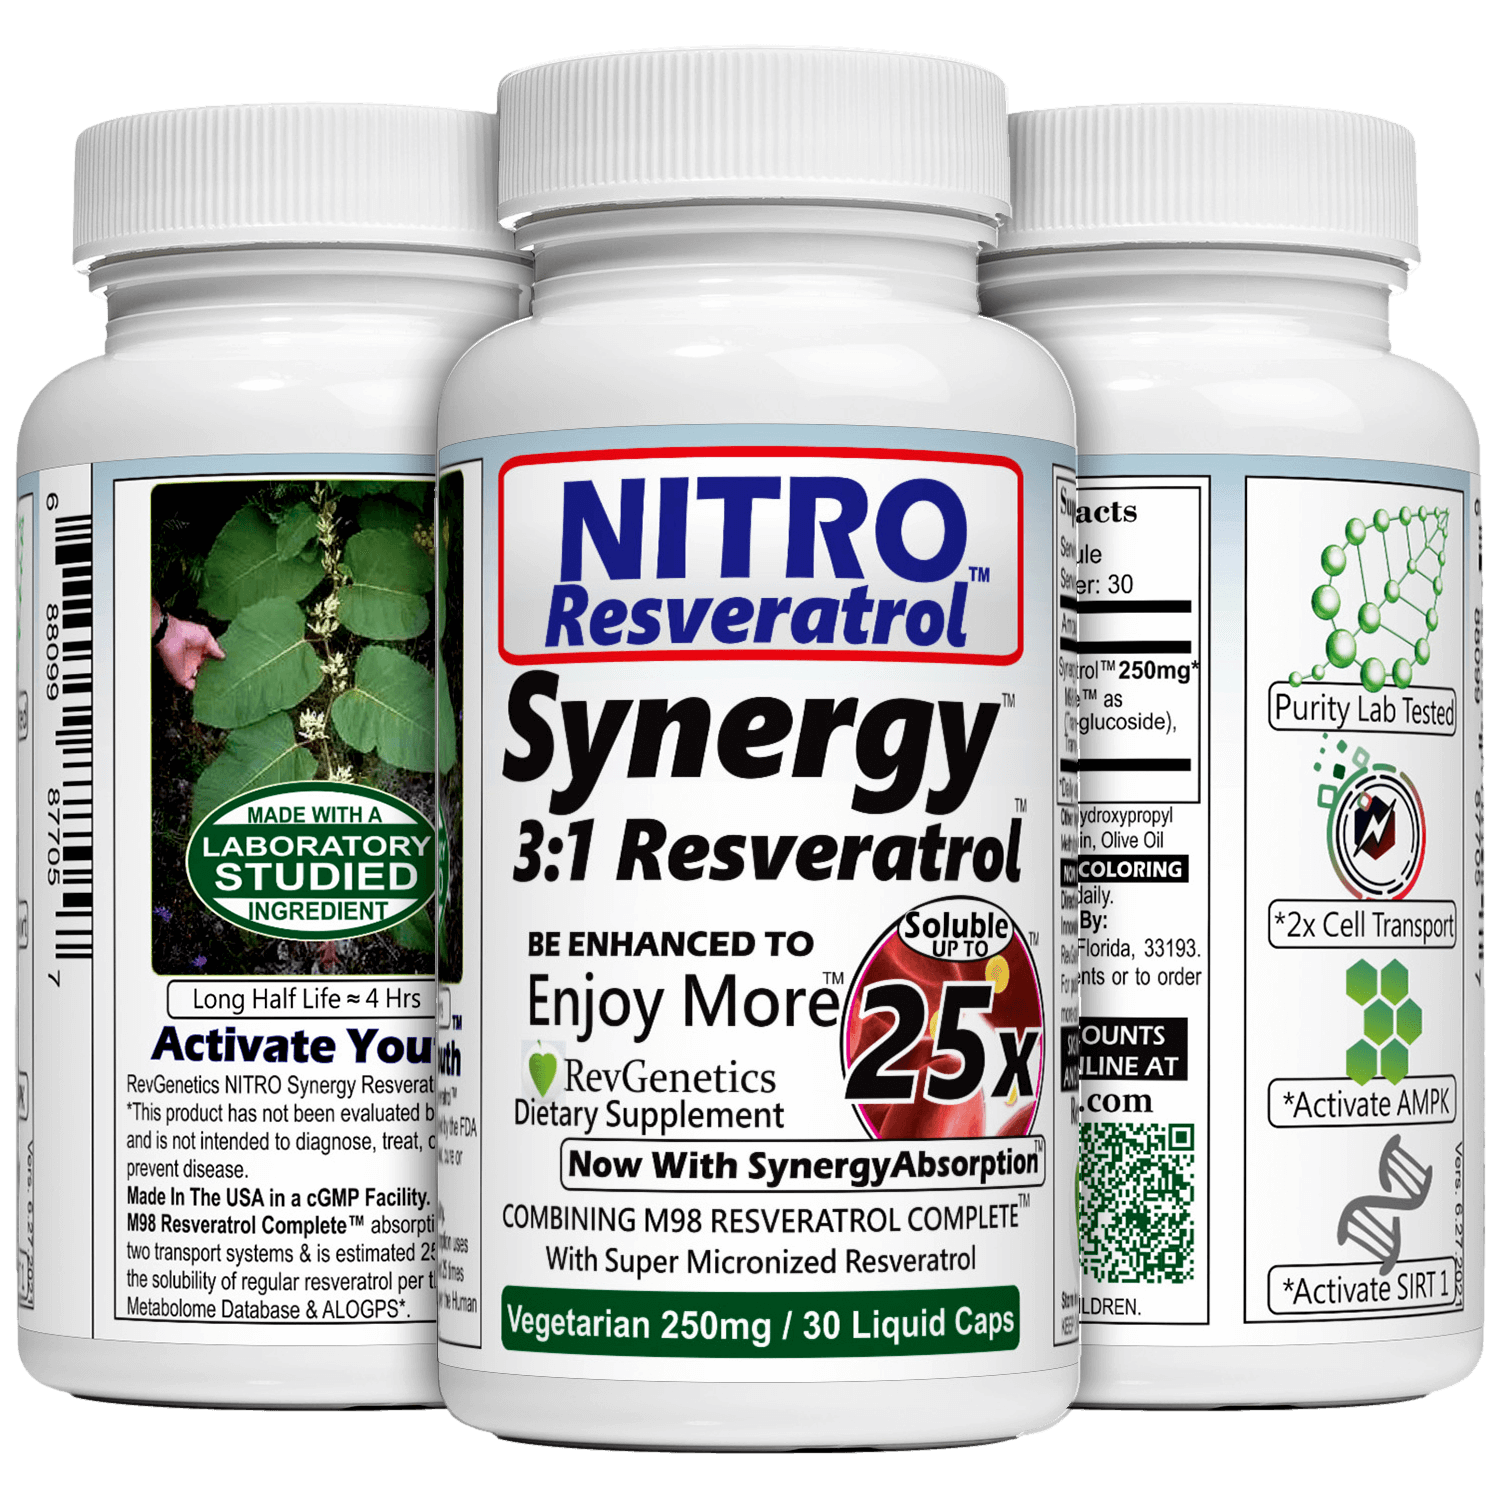 Nitro Synergy: The Best Resveratrol Capsules We Make